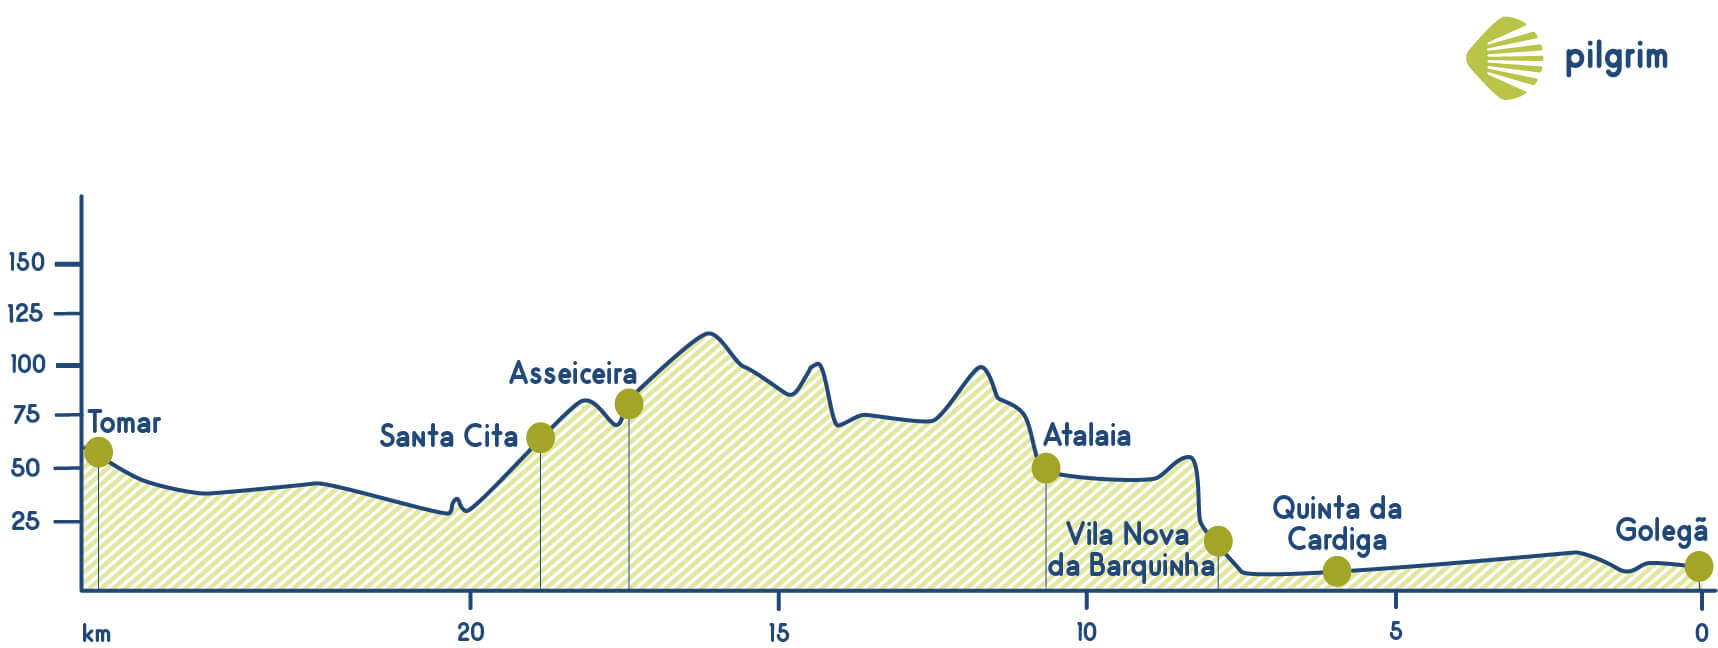 Stage 5 Camino Portugués